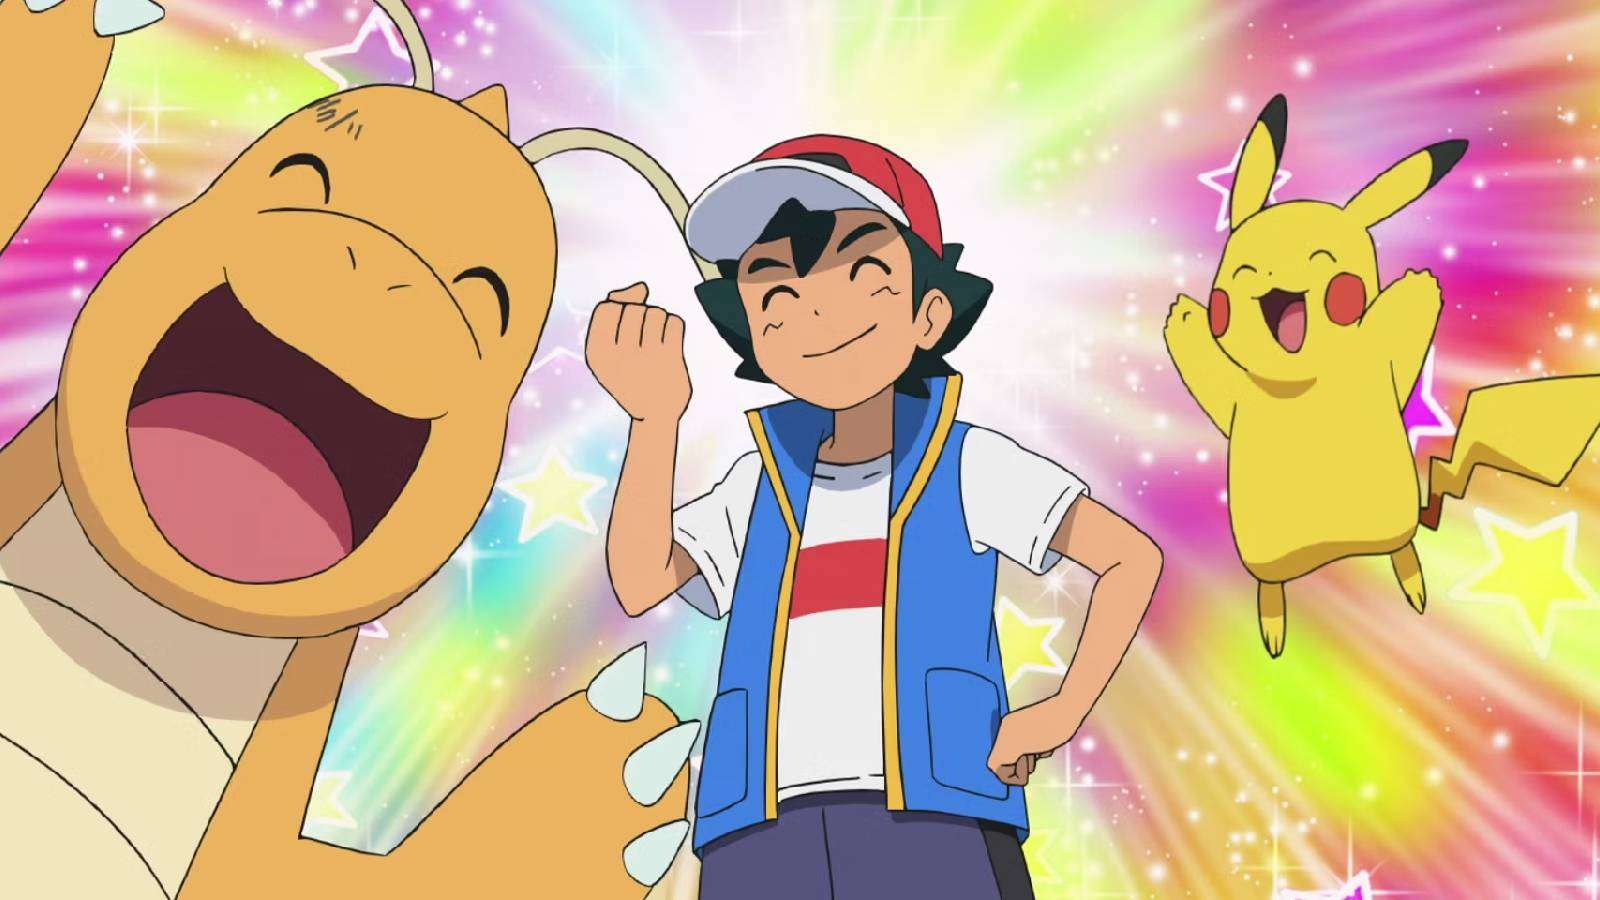 Ash Ketchum appears triumphant next to Pikachu and Dragonite